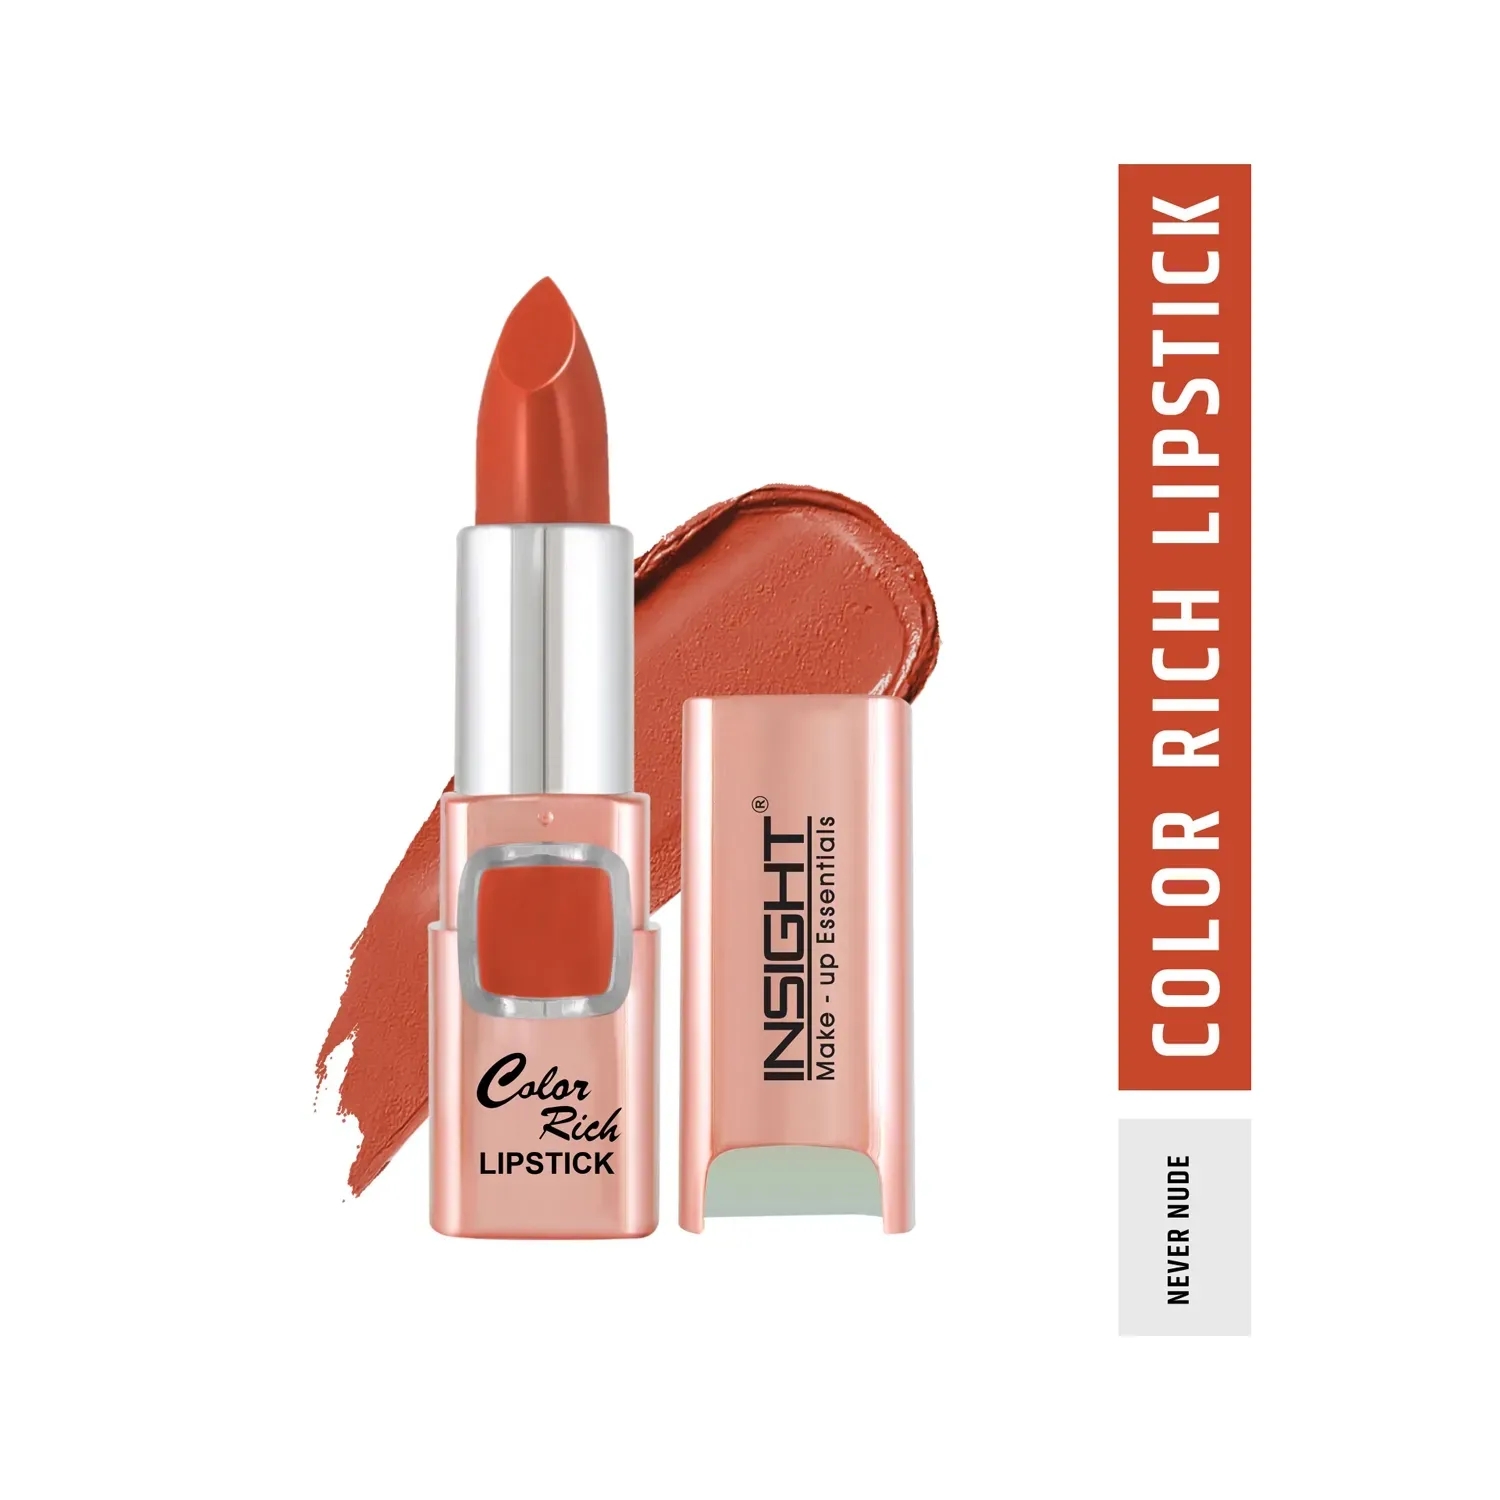 Insight Cosmetics | Insight Cosmetics Color Rich Lipstick - Never Nude (4.2g)